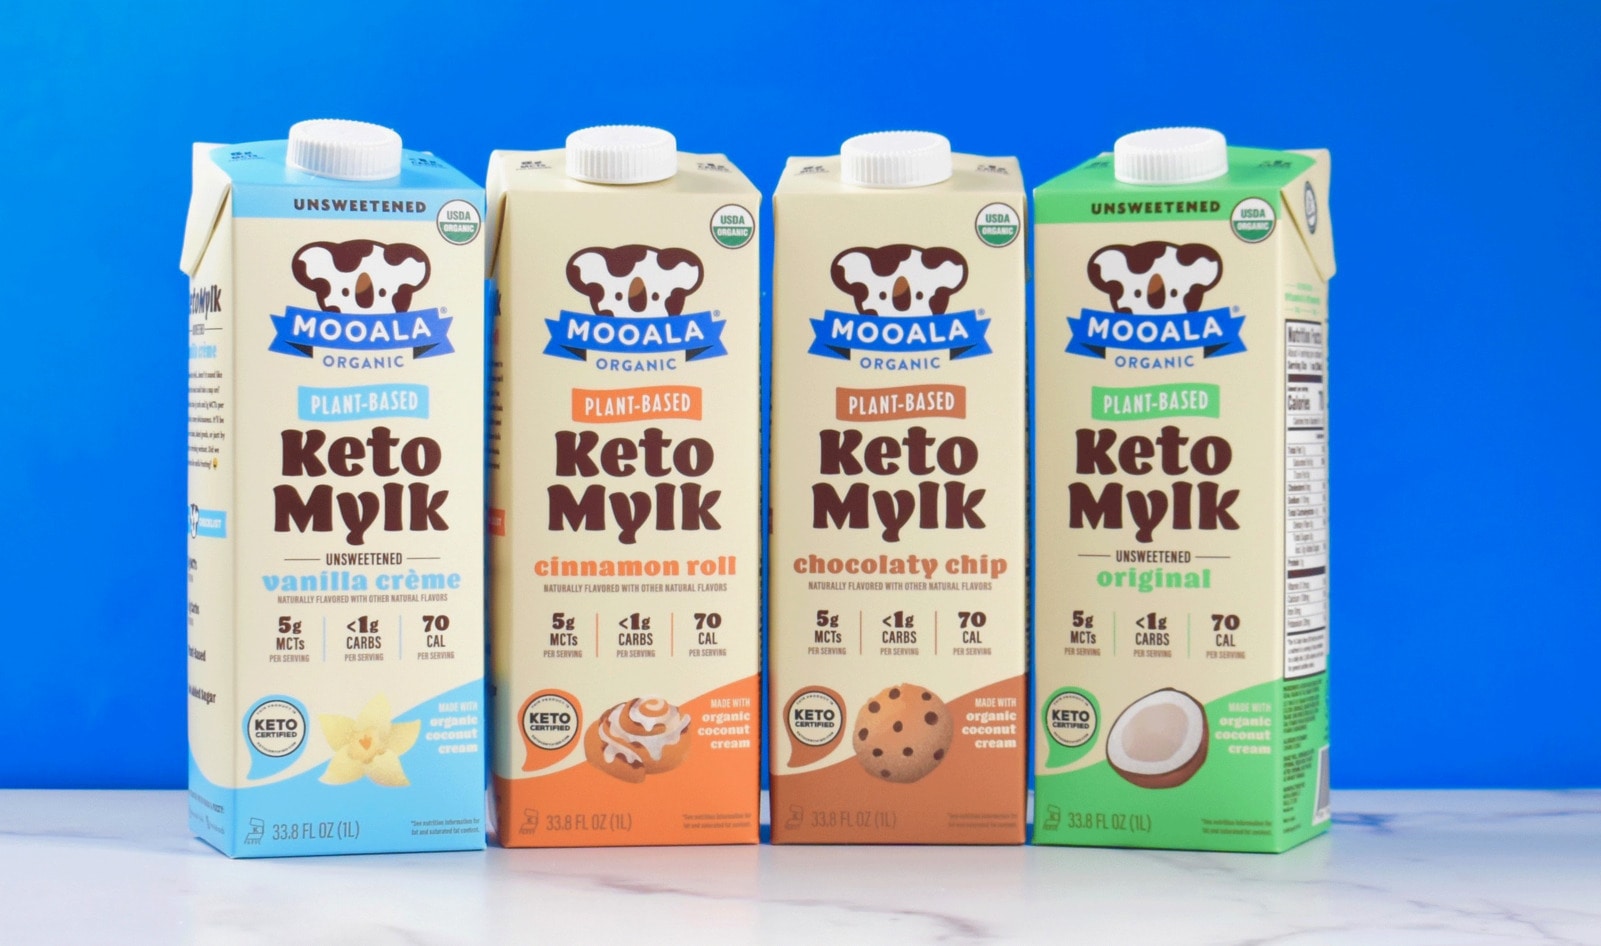 Mooala Launches World’s First Vegan Keto Milk